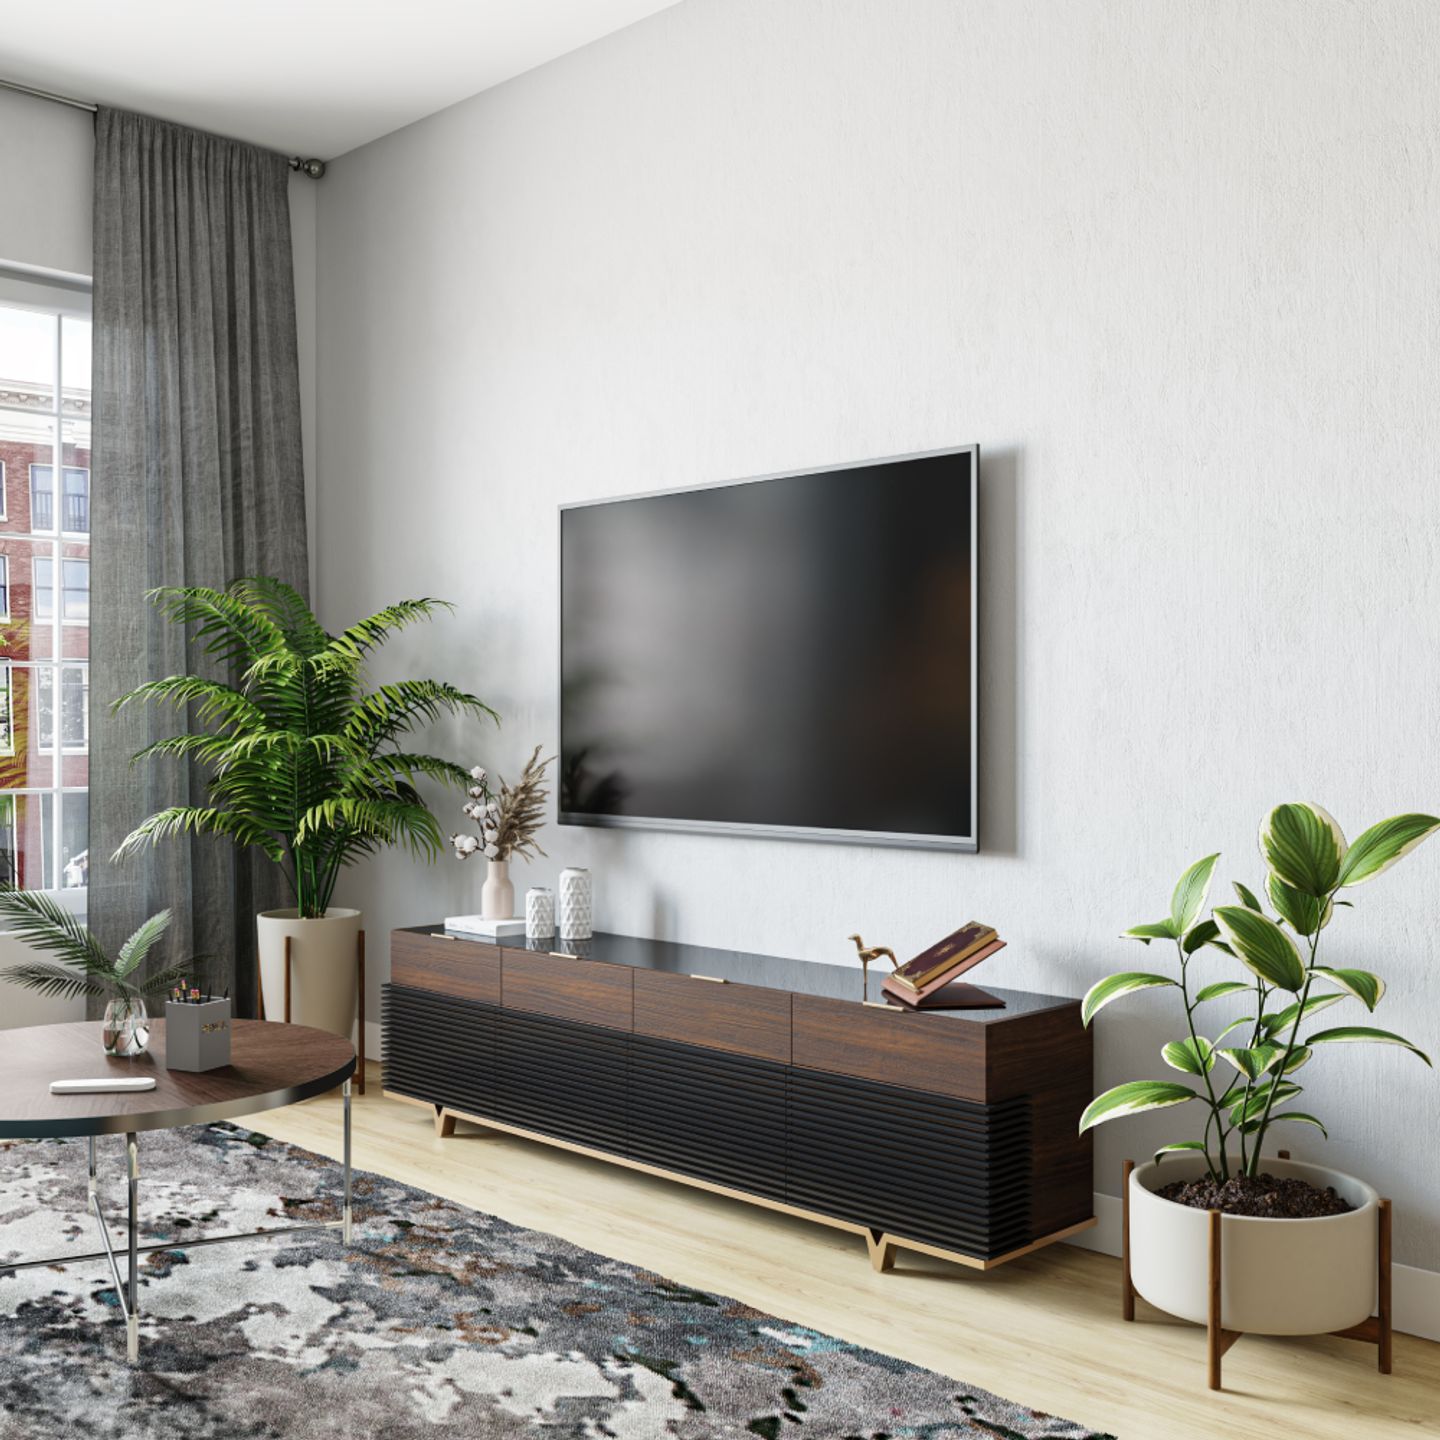 TV Unit Interior Design With Wooden Console - Livspace